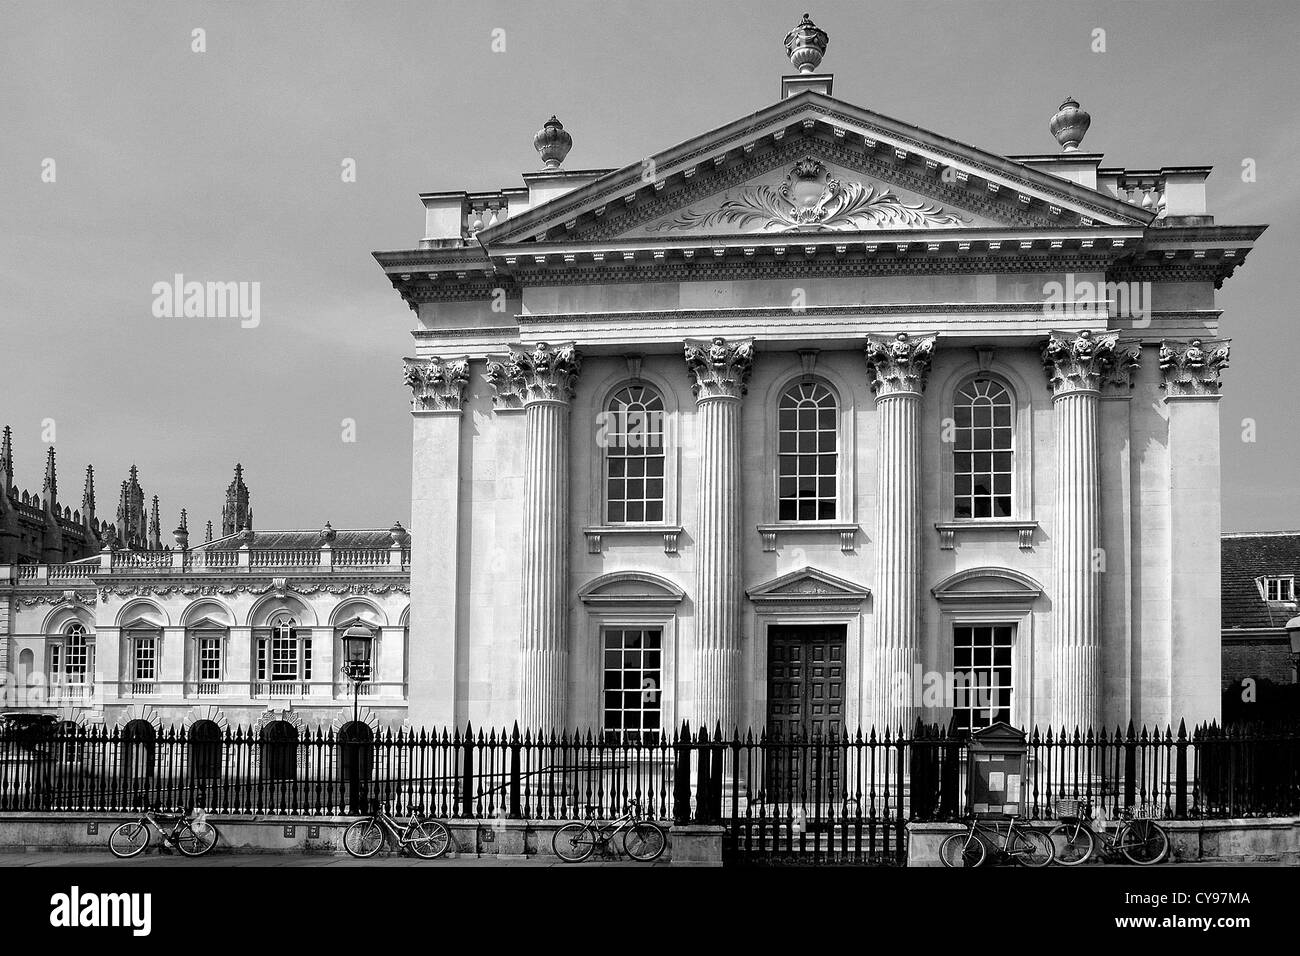 Black and White image of the Exterior of the Senate House, Cambridge City, Cambridgeshire, England, UK Stock Photo